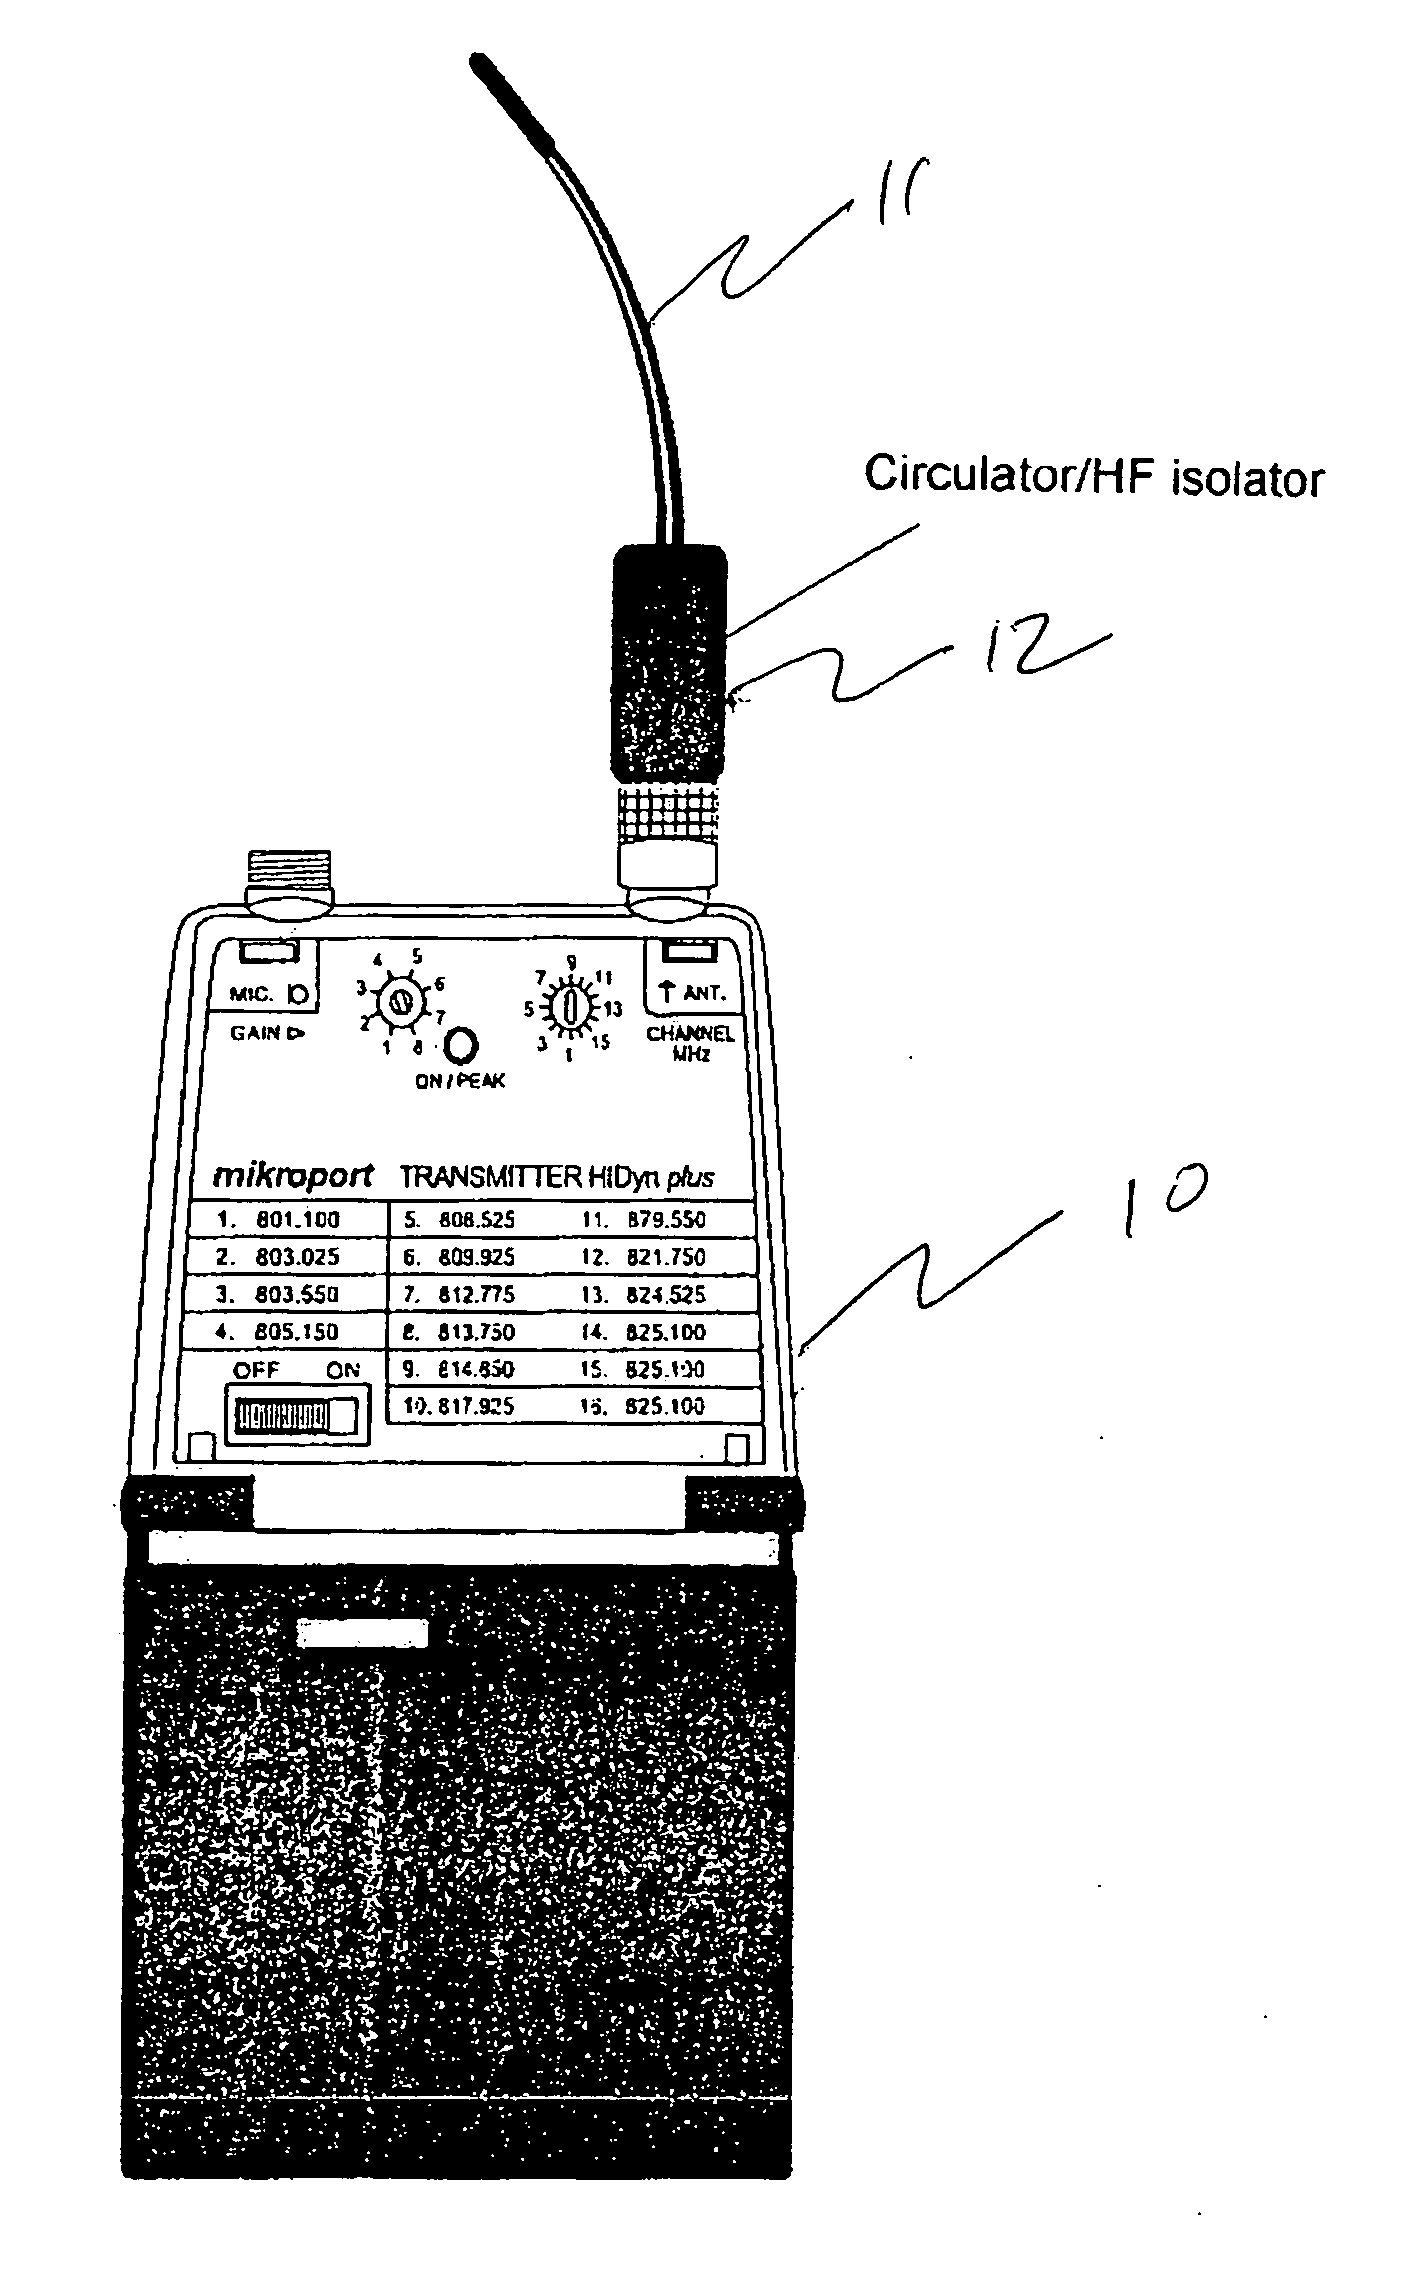 Microphone comprising an hf transmitter